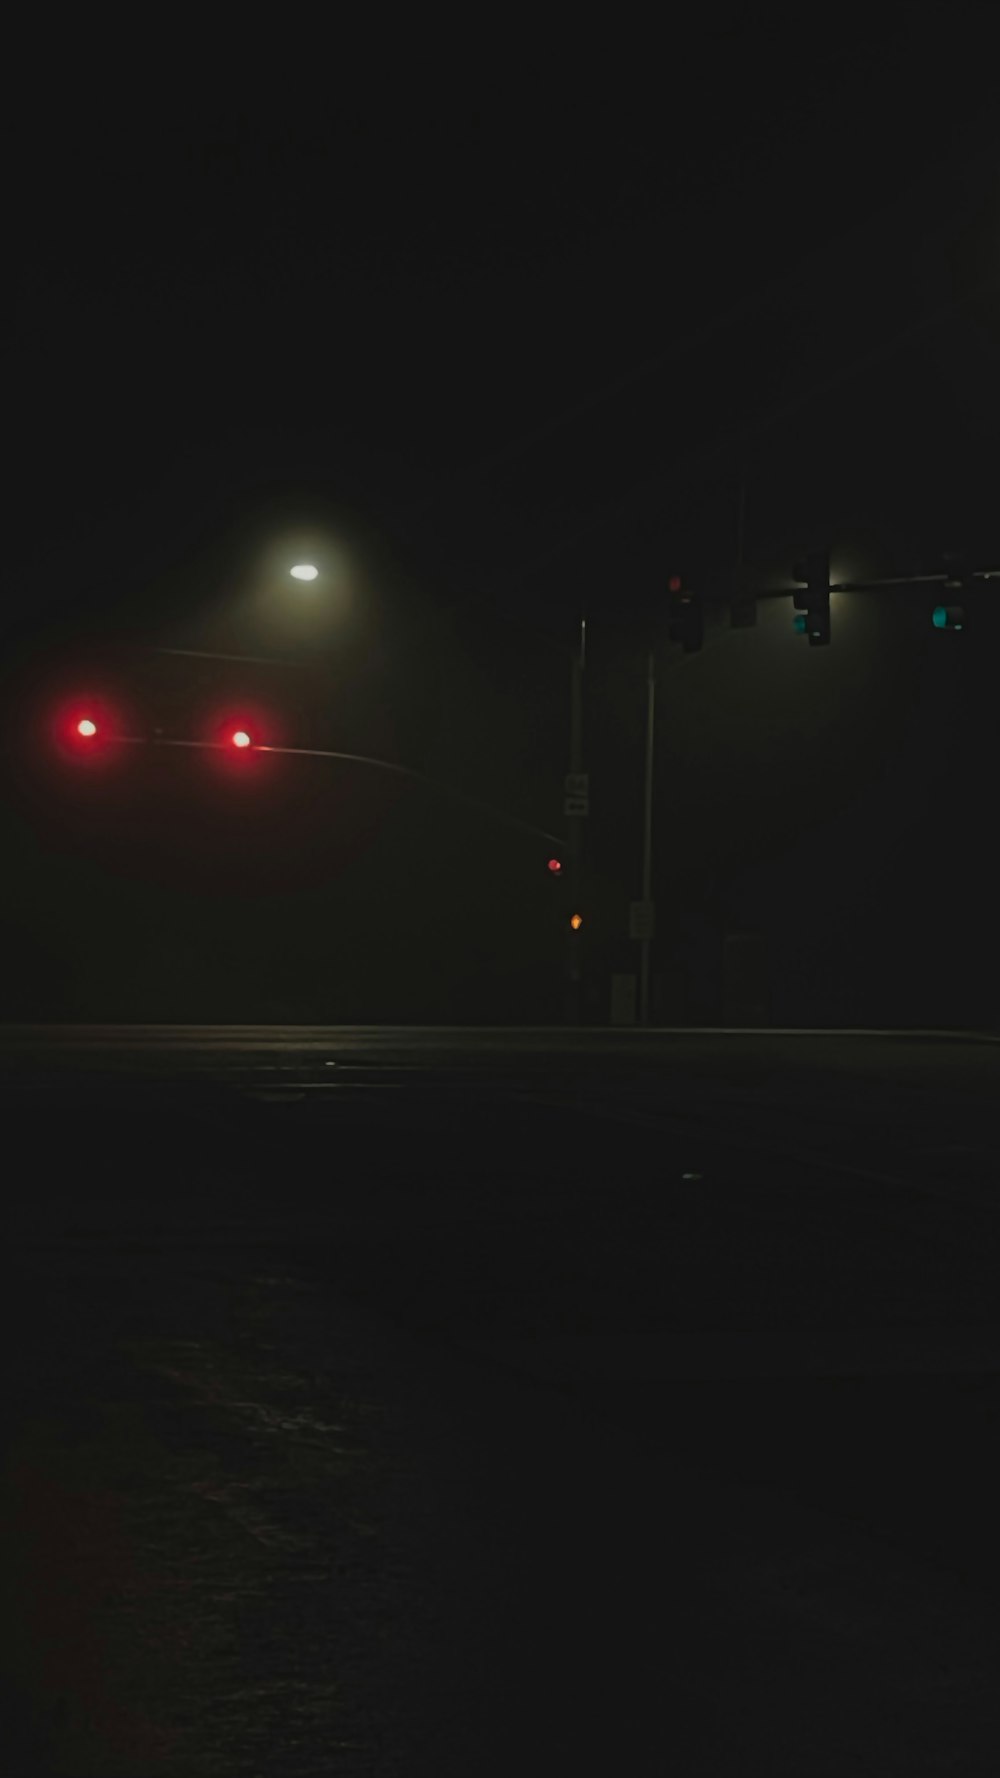 a stop light at night on a dark street